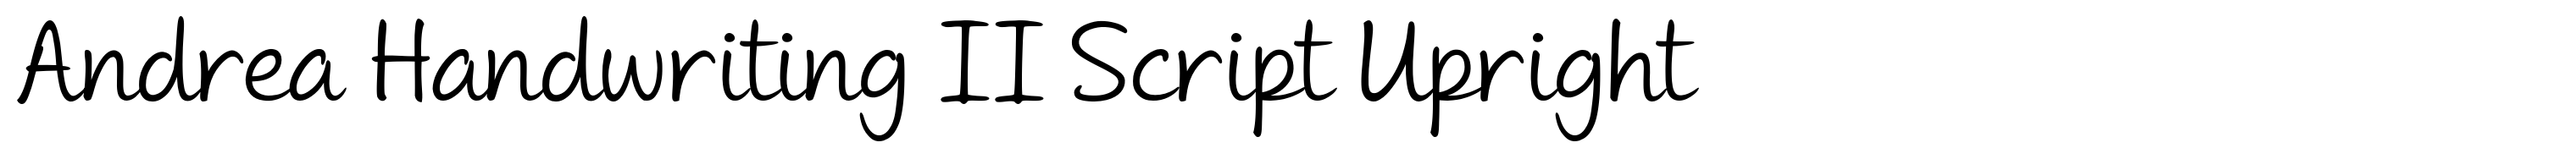 Andrea Handwriting II Script Upright